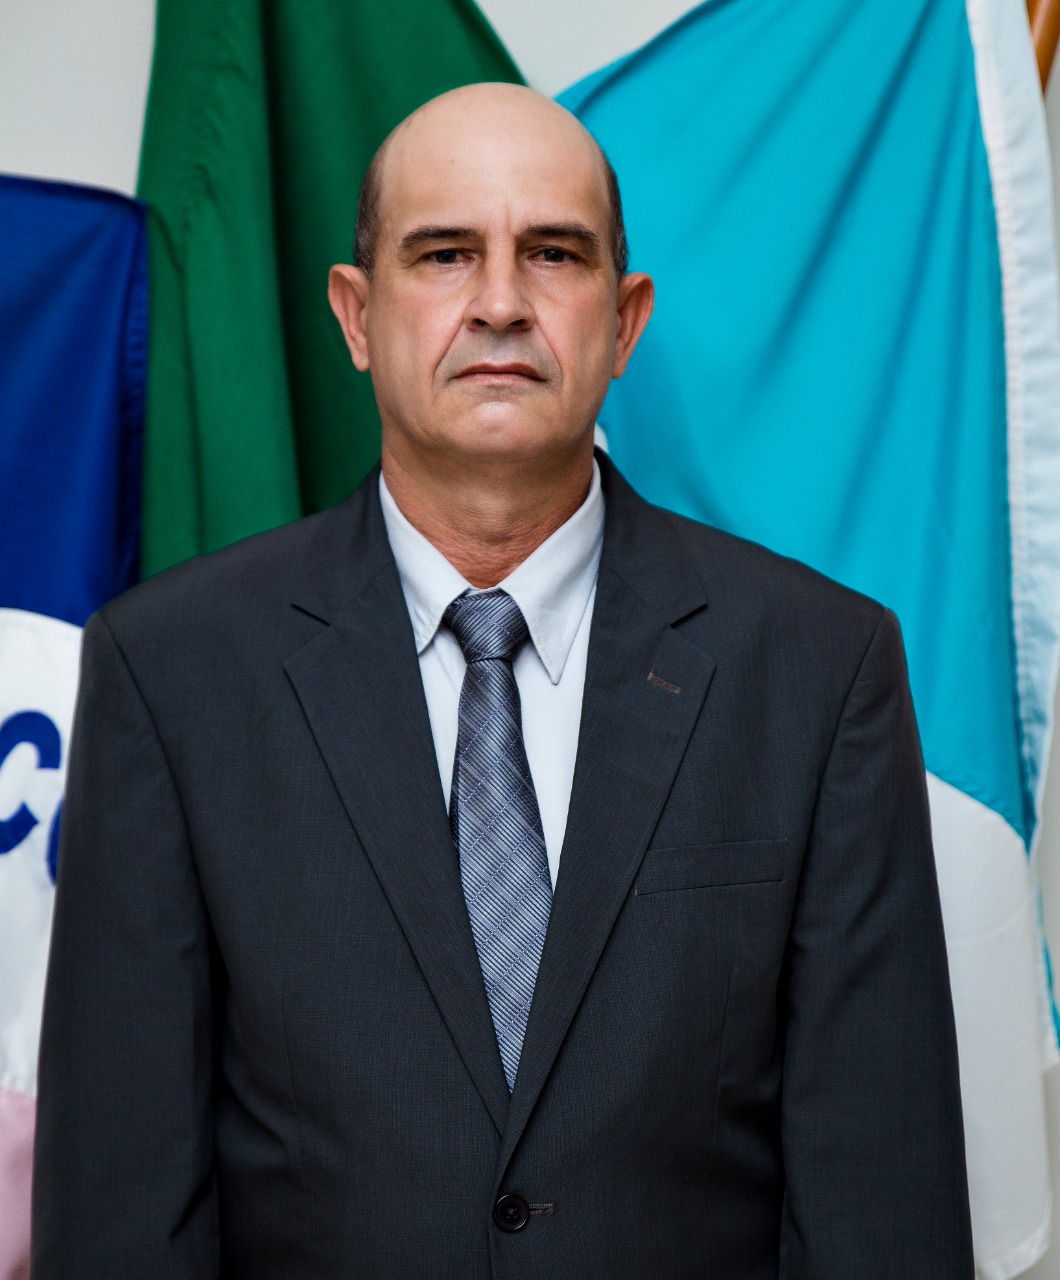 Jose Carlos Biral